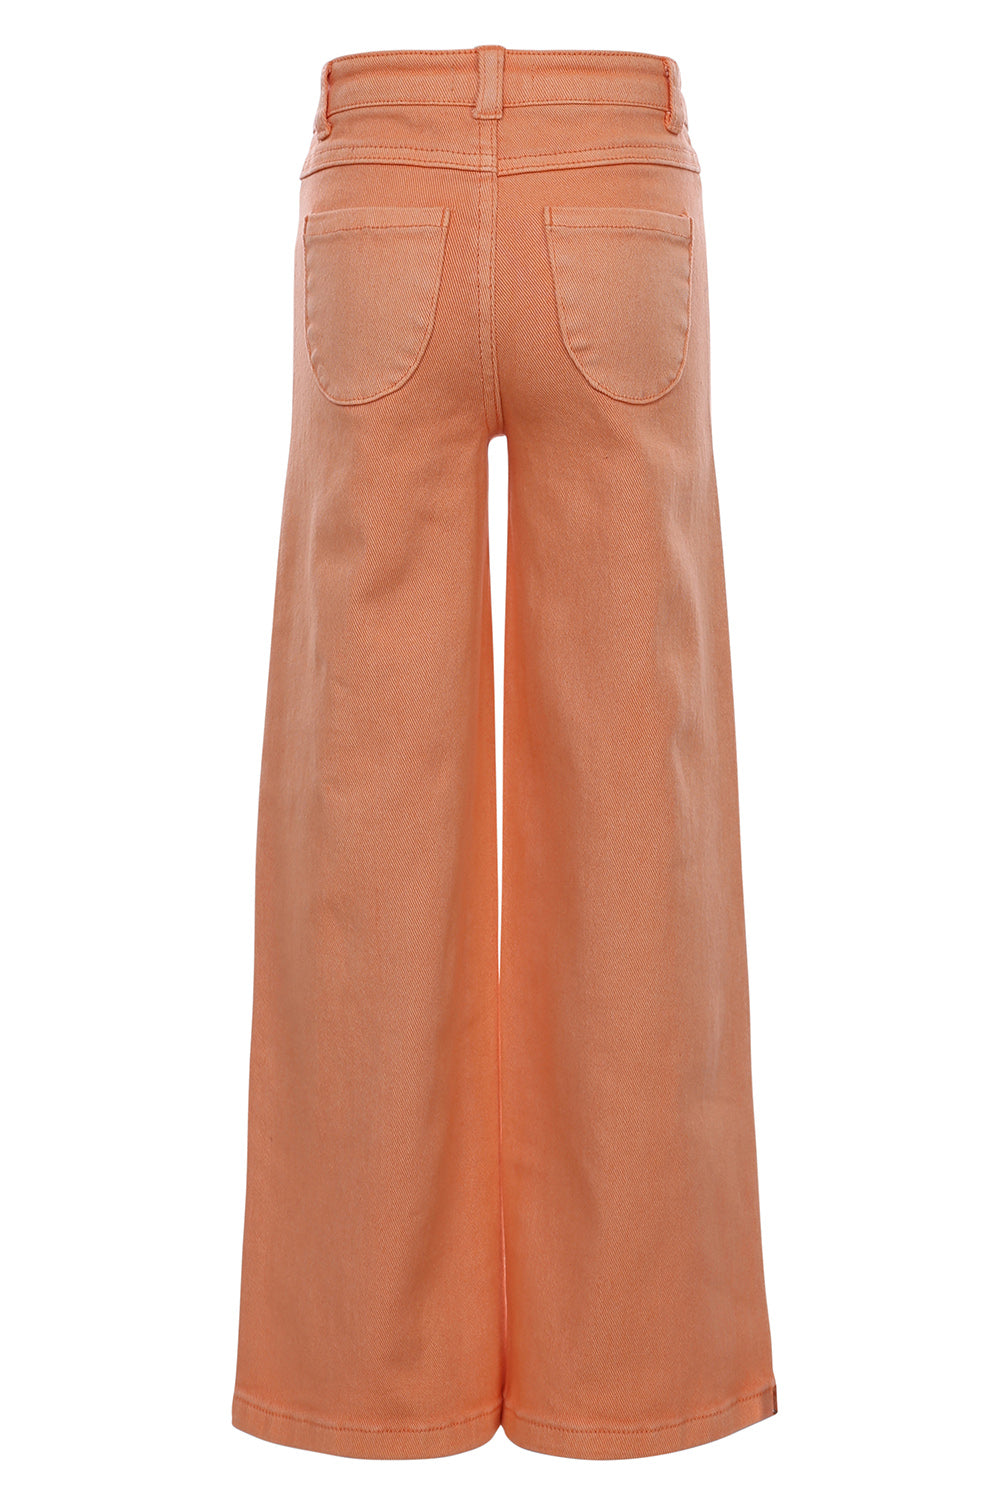 Meisjes Gm Dye Denim Pants van LOOXS Little in de kleur Orange peach in maat 128.